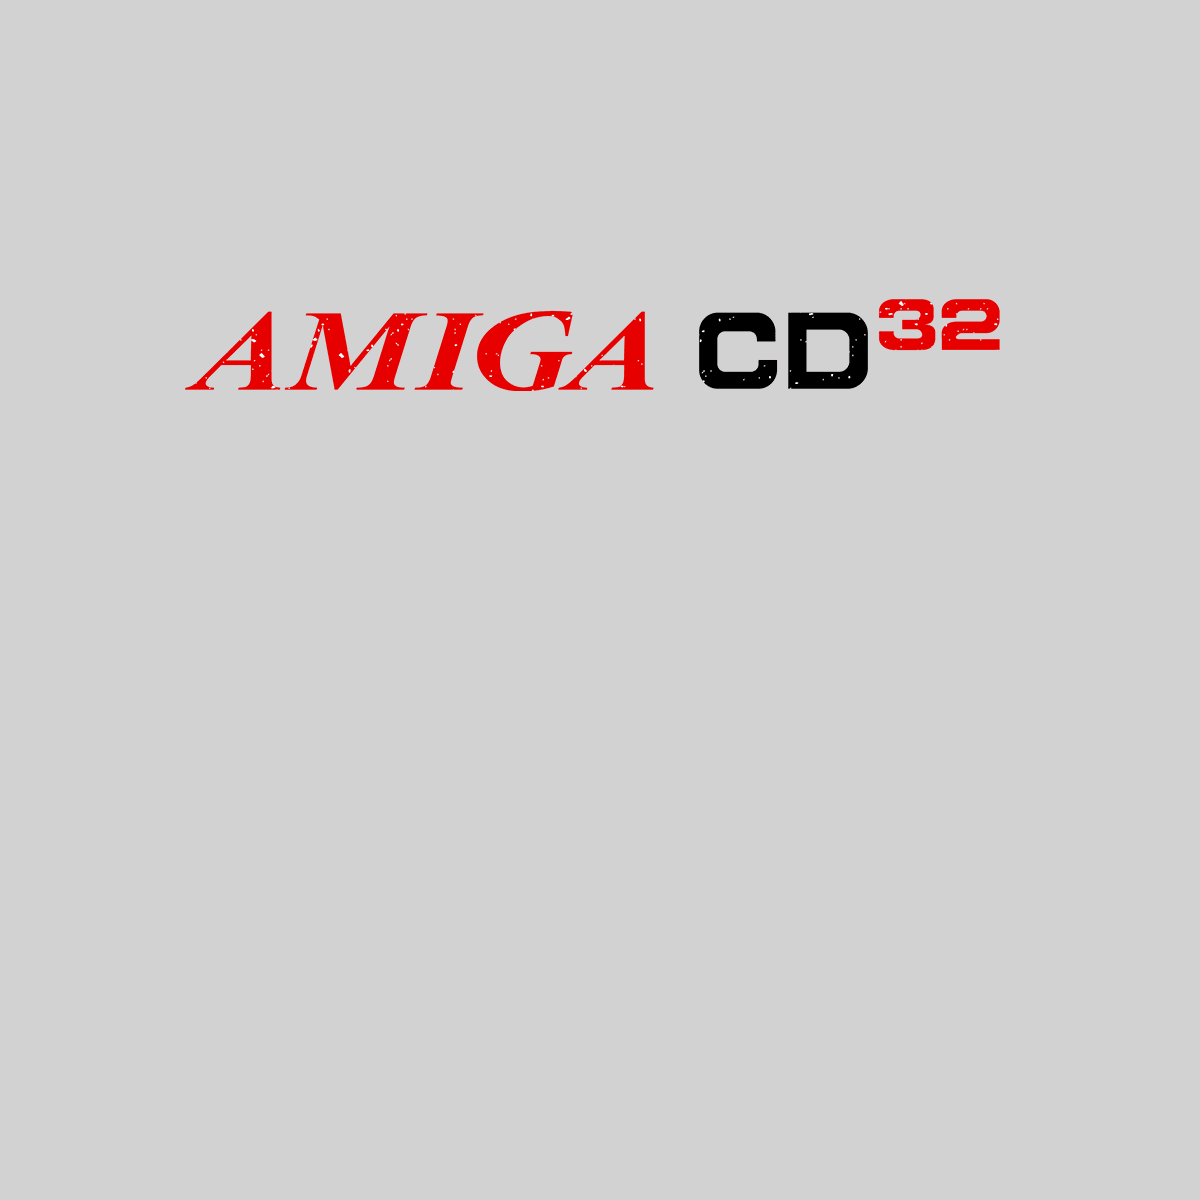 Amiga CD 32 Retro Game Console Arcade Unisex T-Shirts OLD SKOOL Fast Delivery - Kuzi Tees